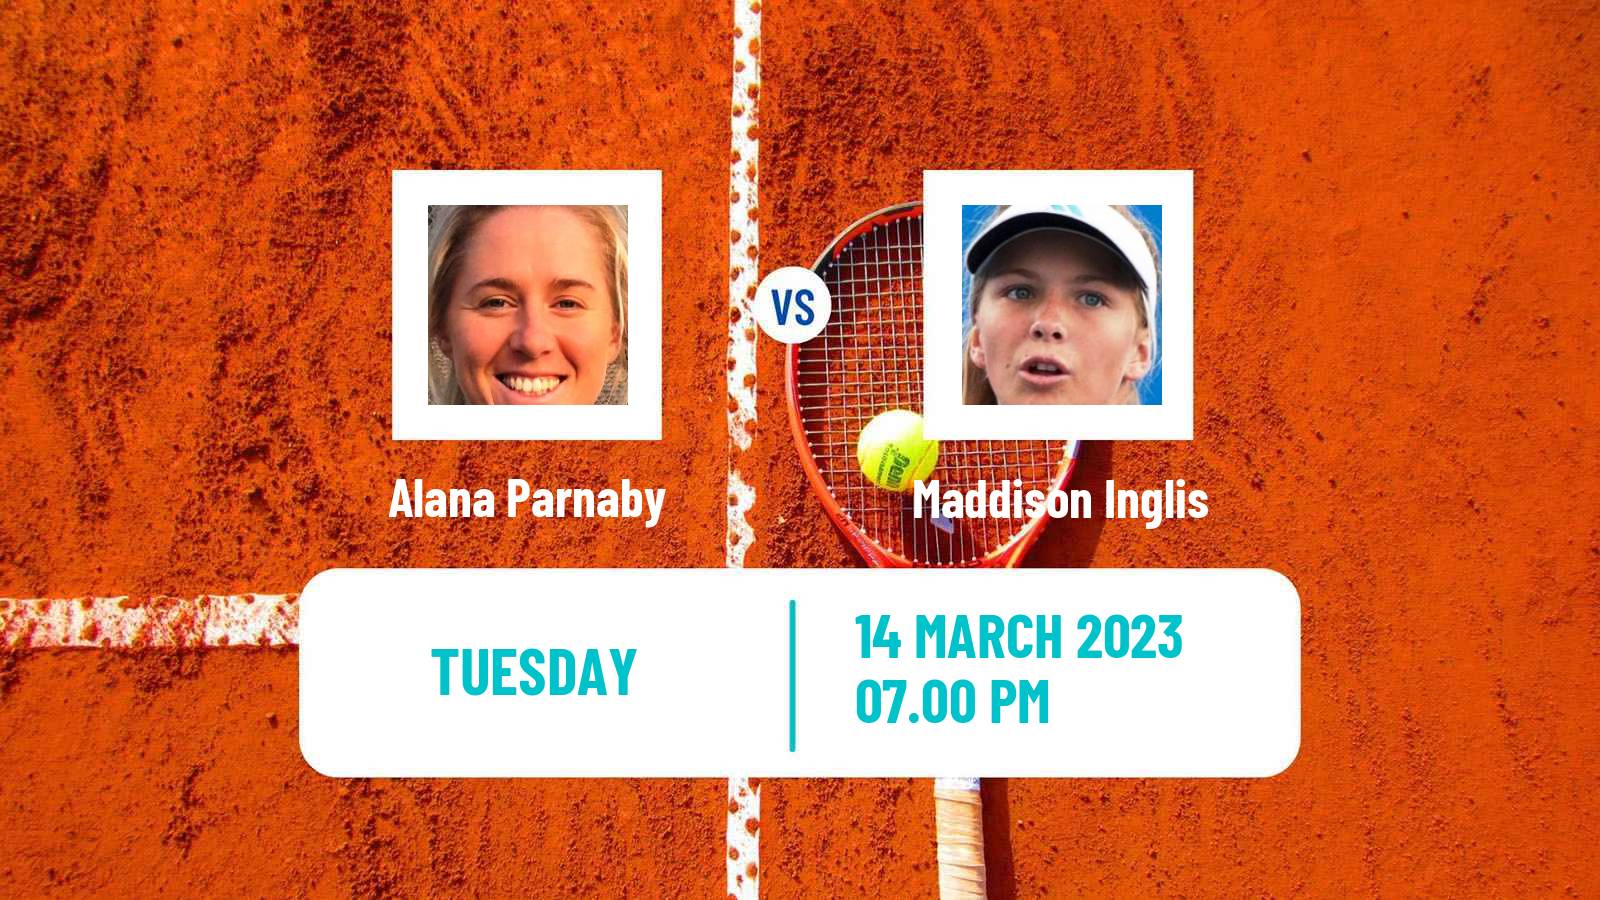 Tennis ITF Tournaments Alana Parnaby - Maddison Inglis